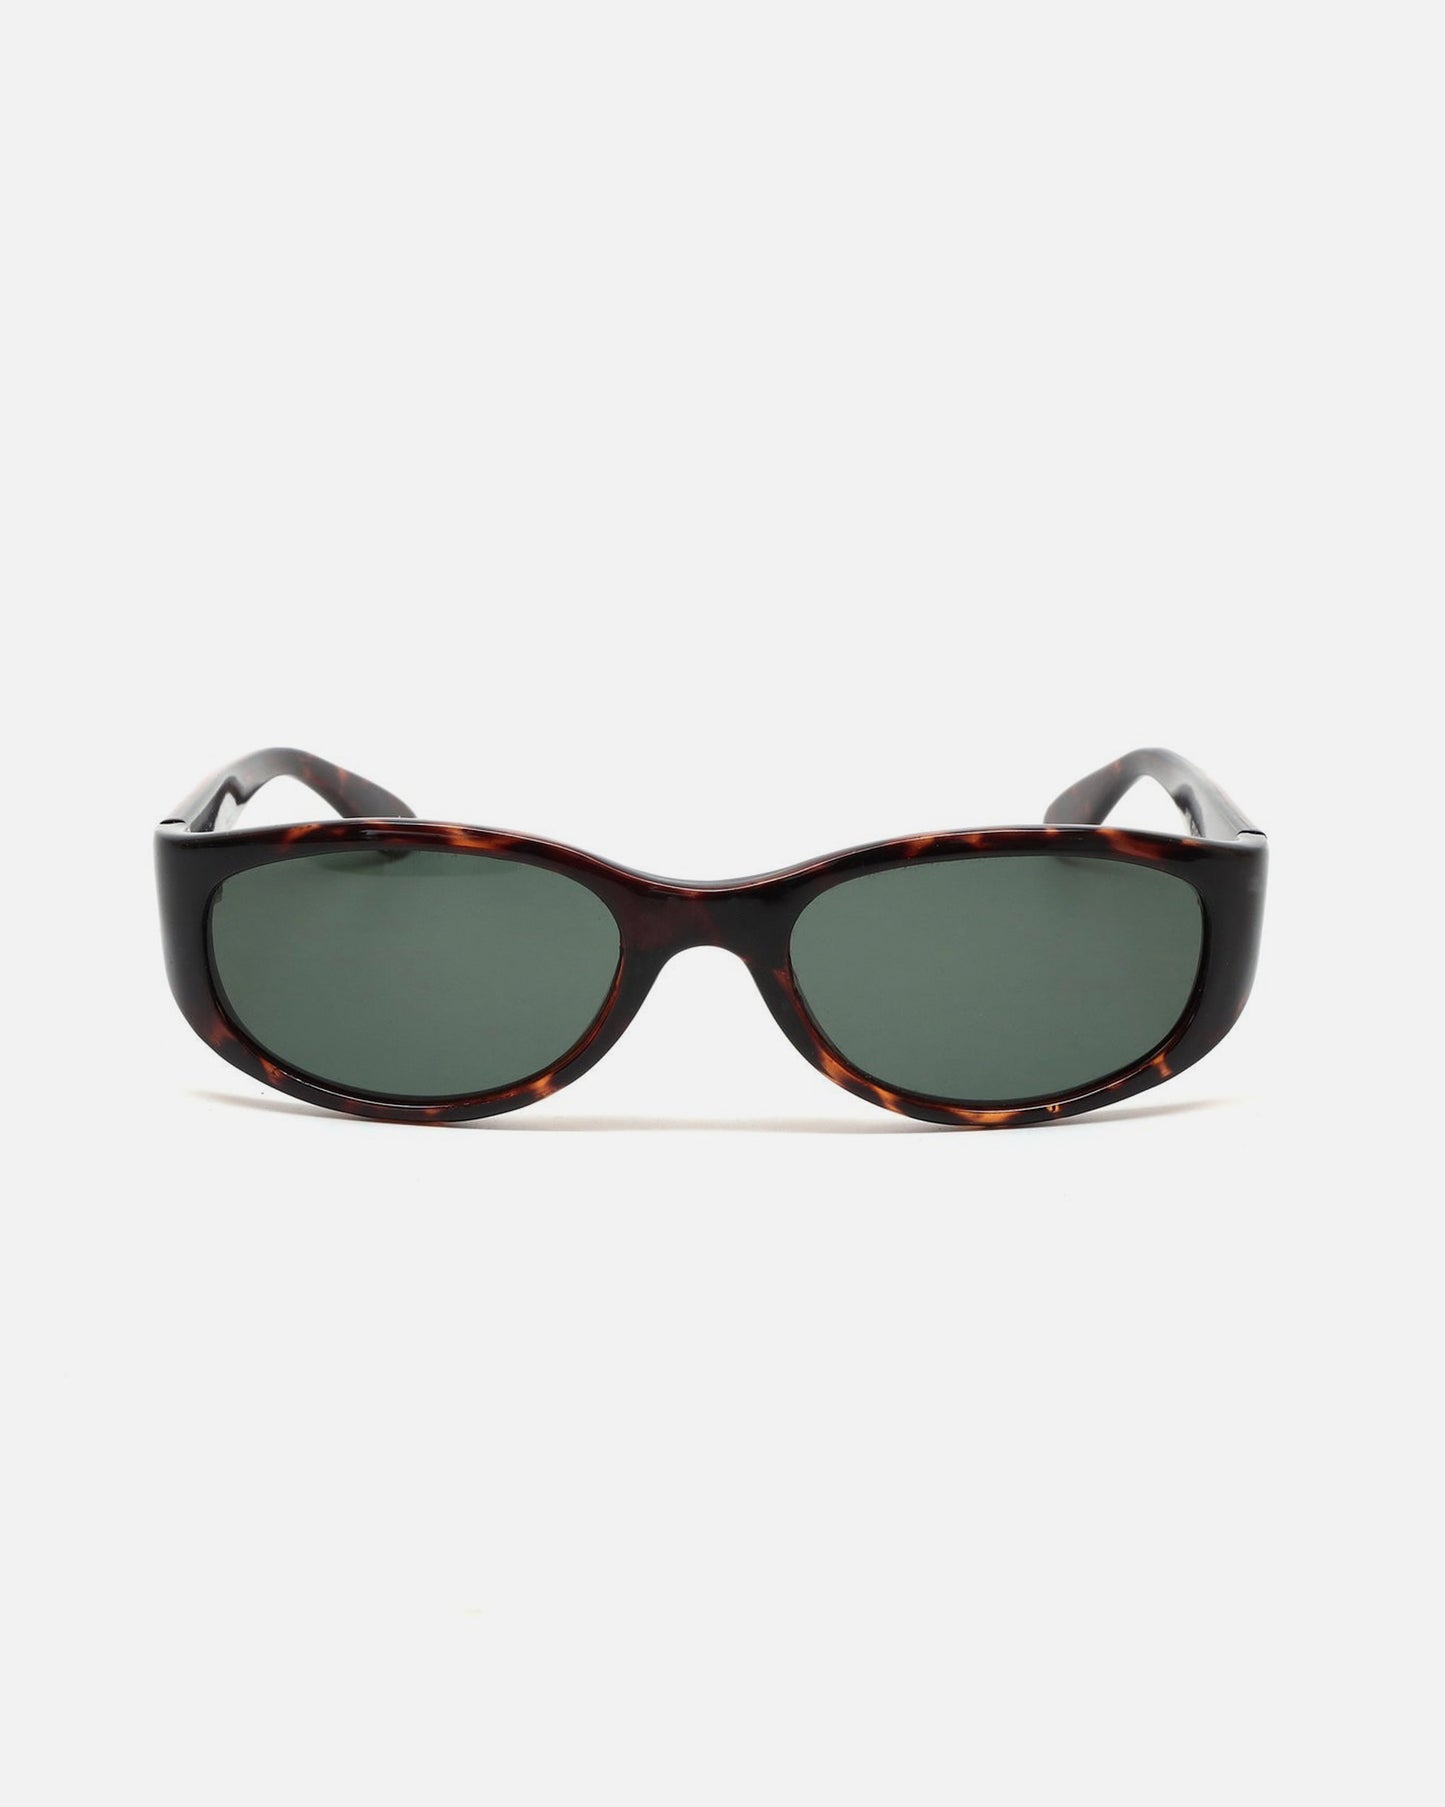 NOS 90s Tortoise Oval Sunglasses